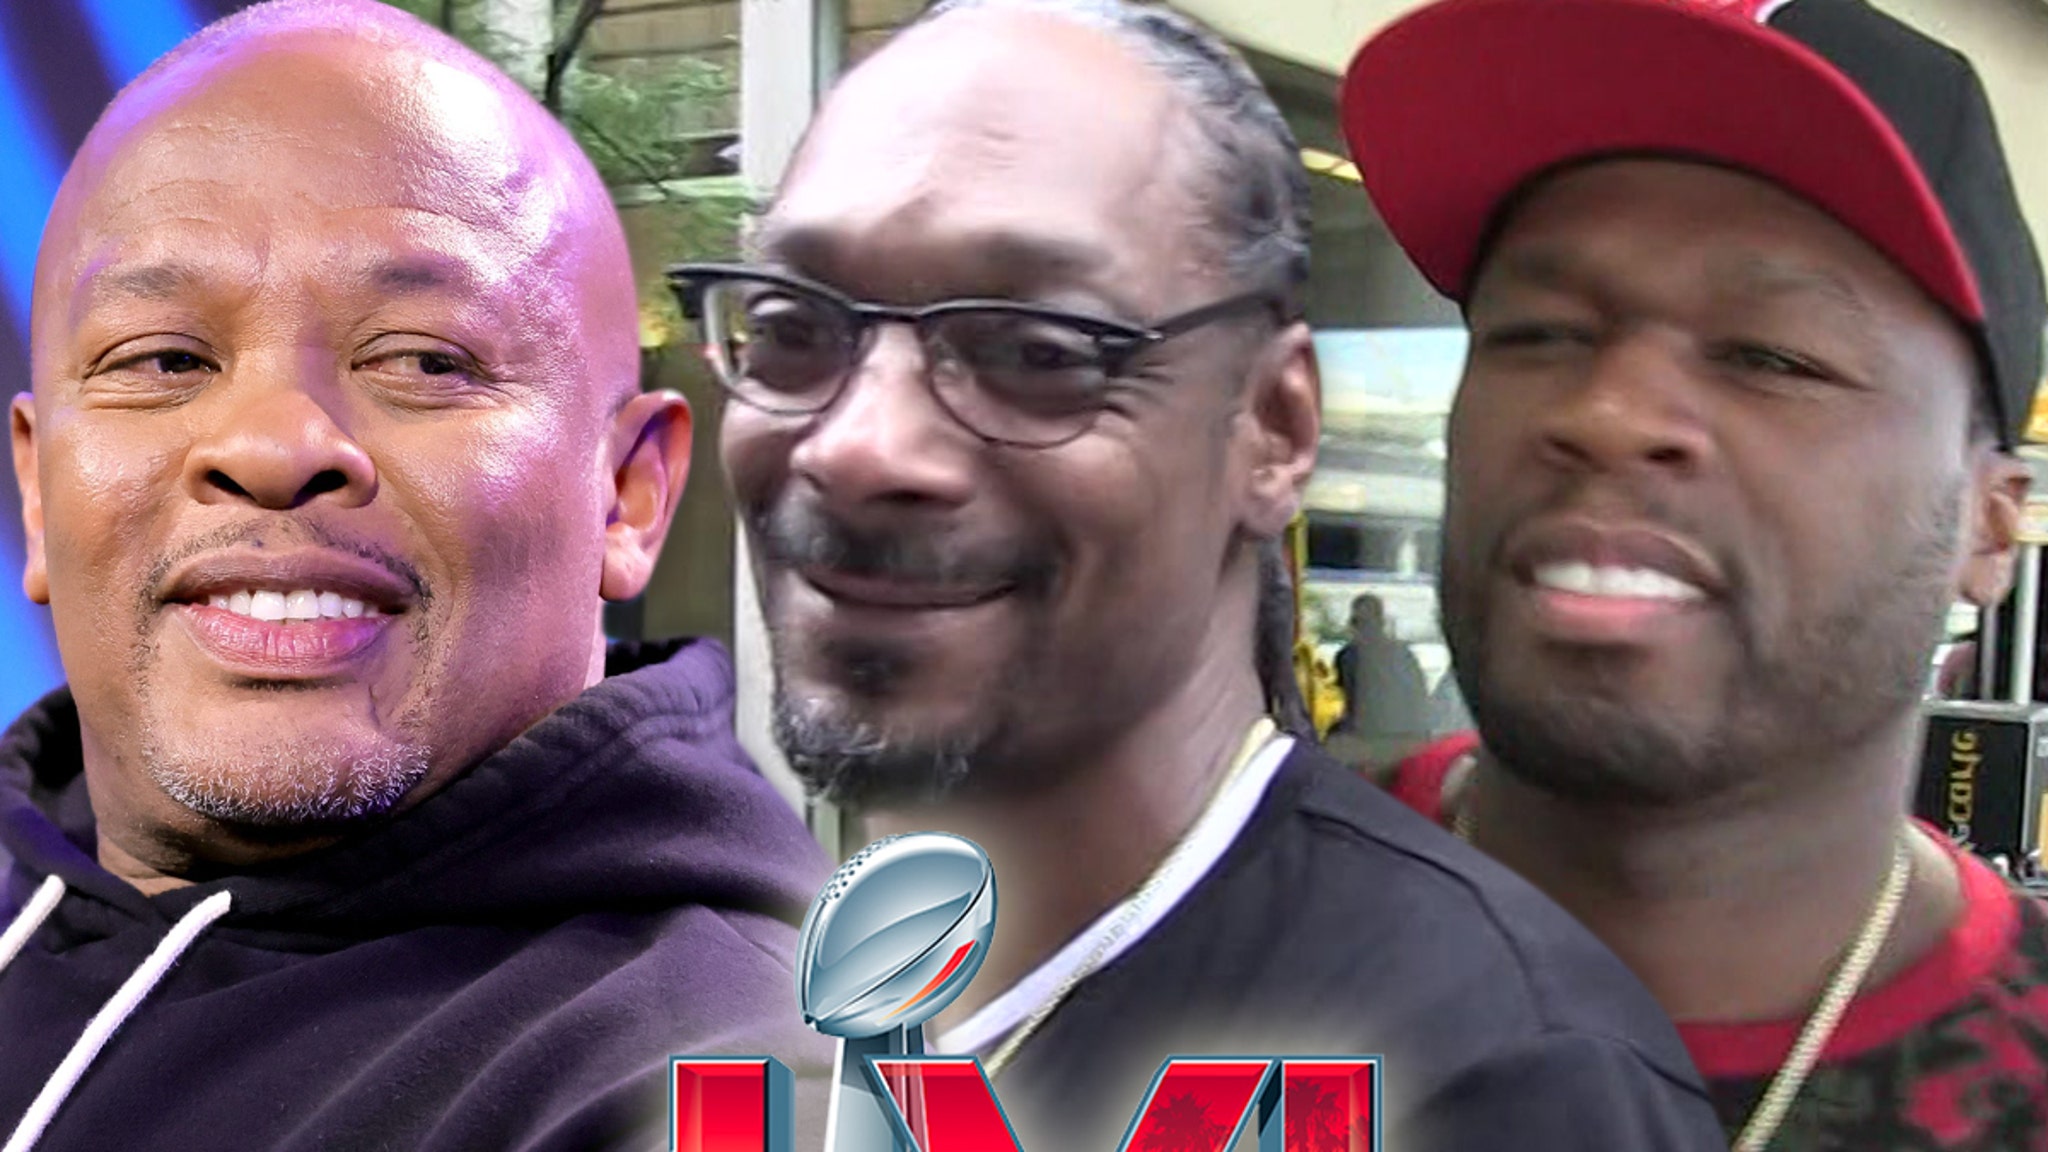 50 Cent Joins Snoop Dogg & Dr. Dre for Super Bowl Halftime Show